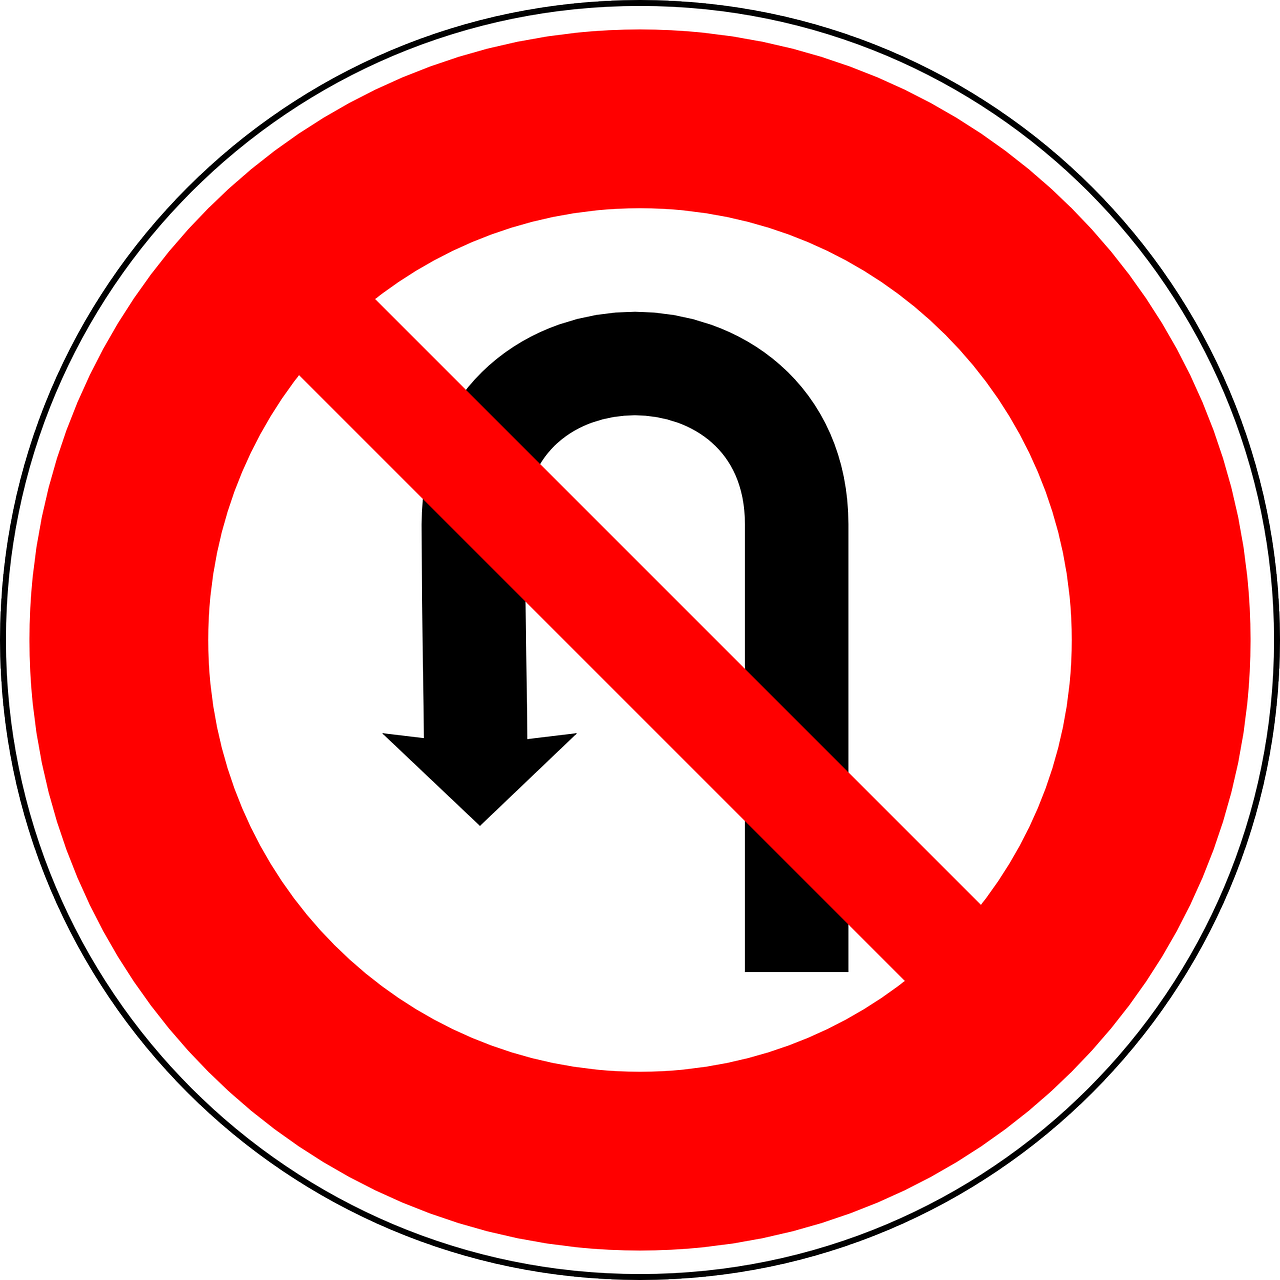 Traffic signs - Uturn